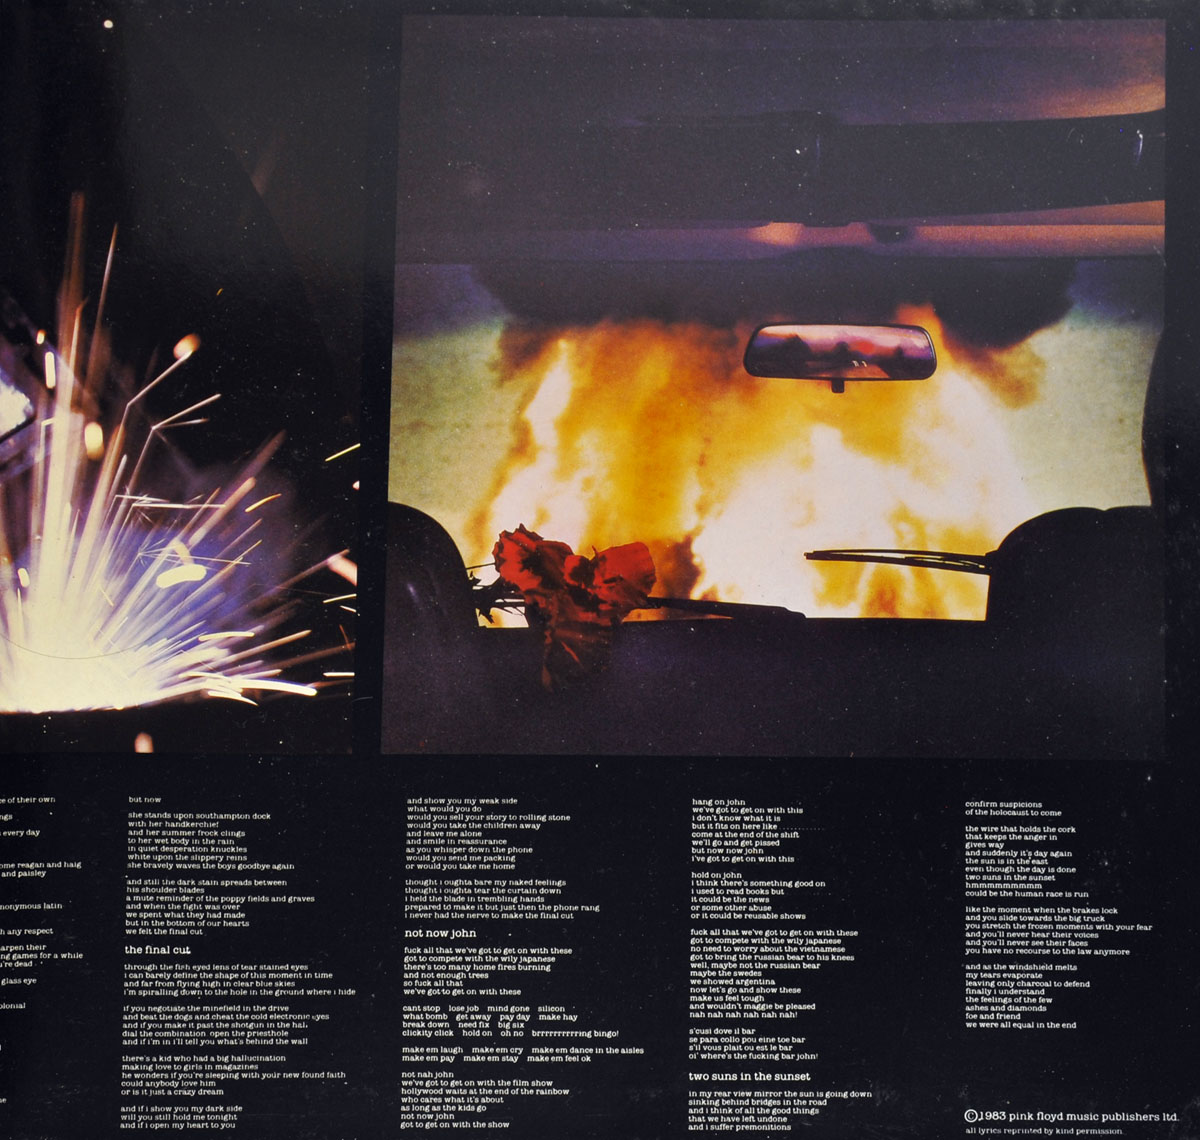 PINK FLOYD Final Cut 12 Vinyl LP Album Vinyl Album Cover Gallery &  Information #vinylrecords